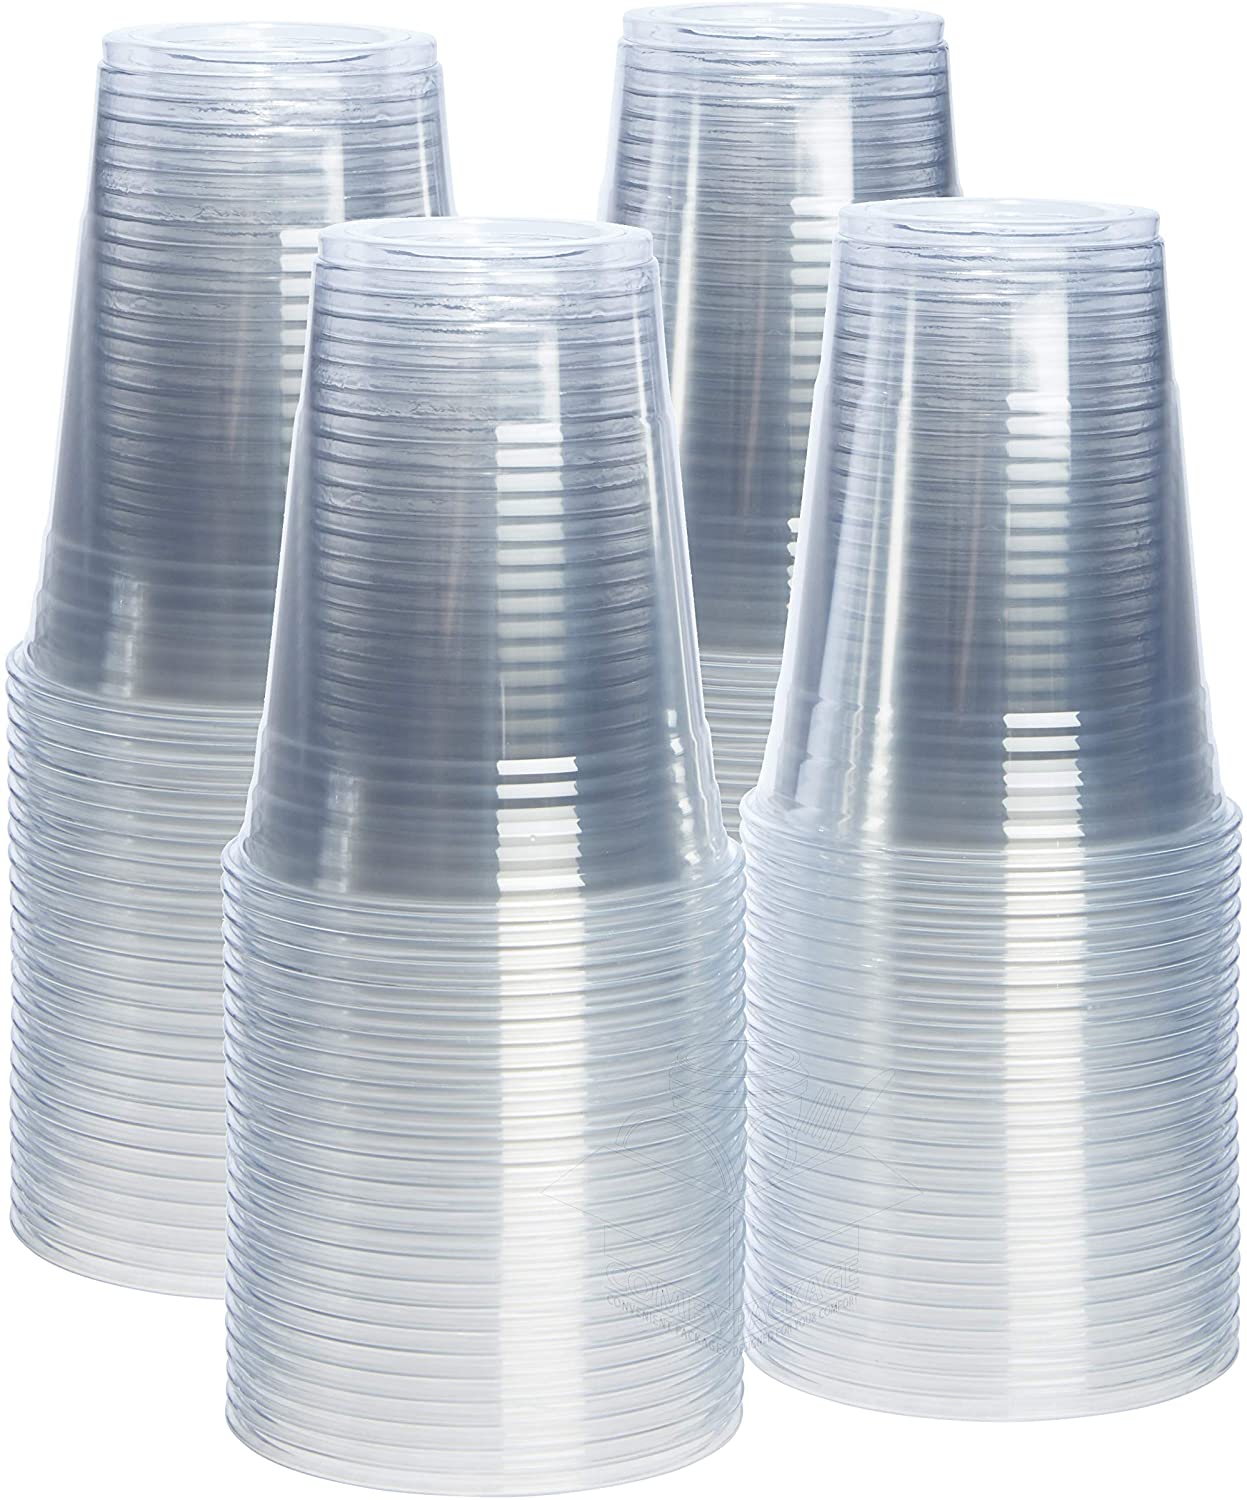 Plastic Cold Cups - 16 oz.